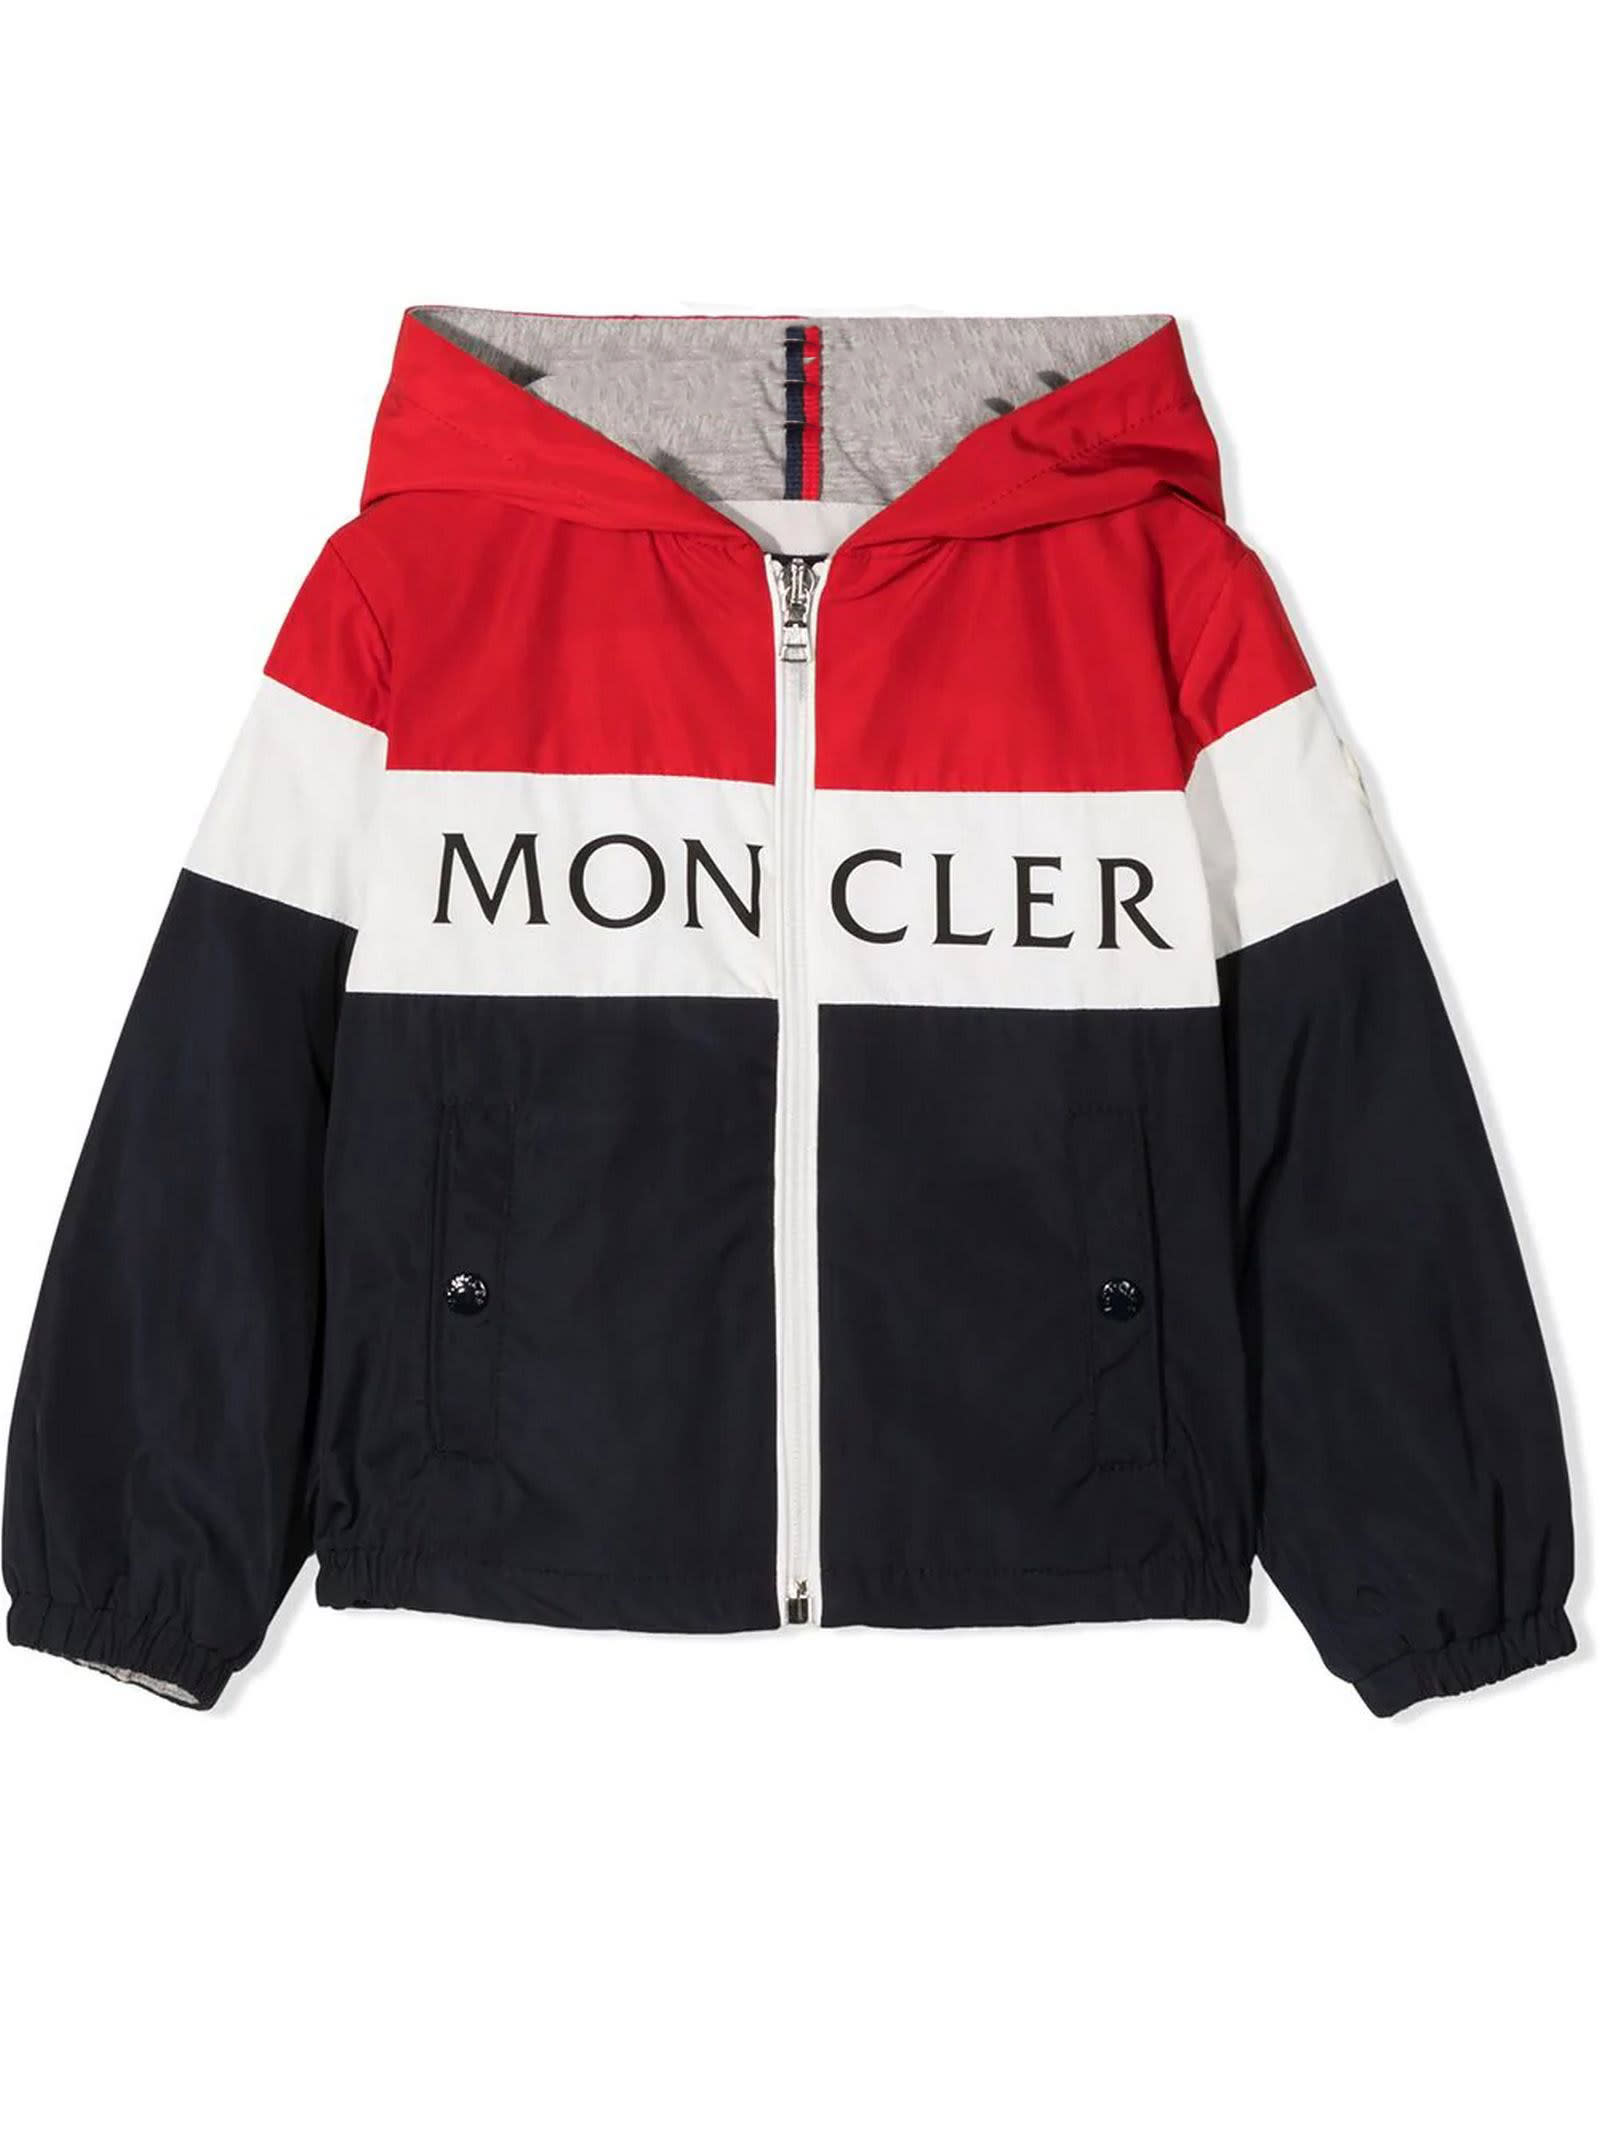 Moncler Red/white/blue Jacket